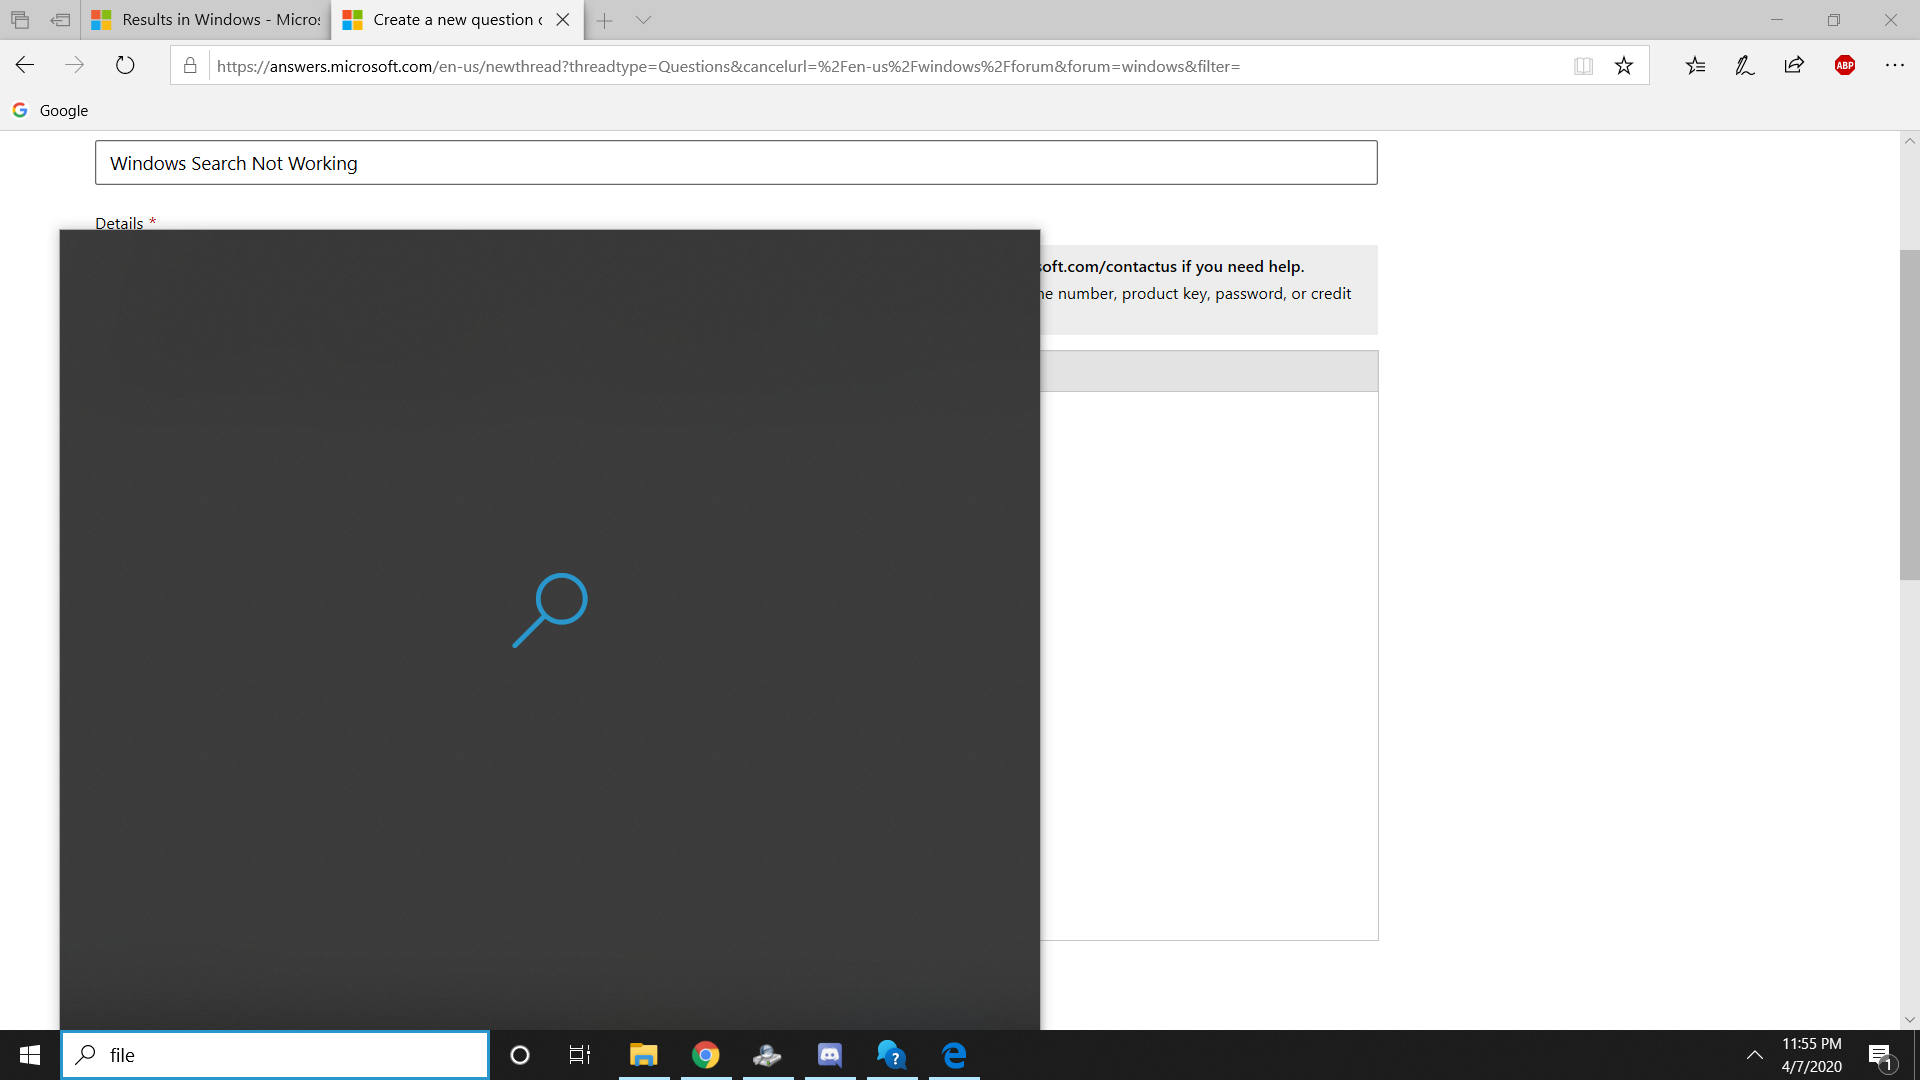 Windows Search Not Working 7bb4de84-3ce3-4041-a669-614f78c5273d?upload=true.png